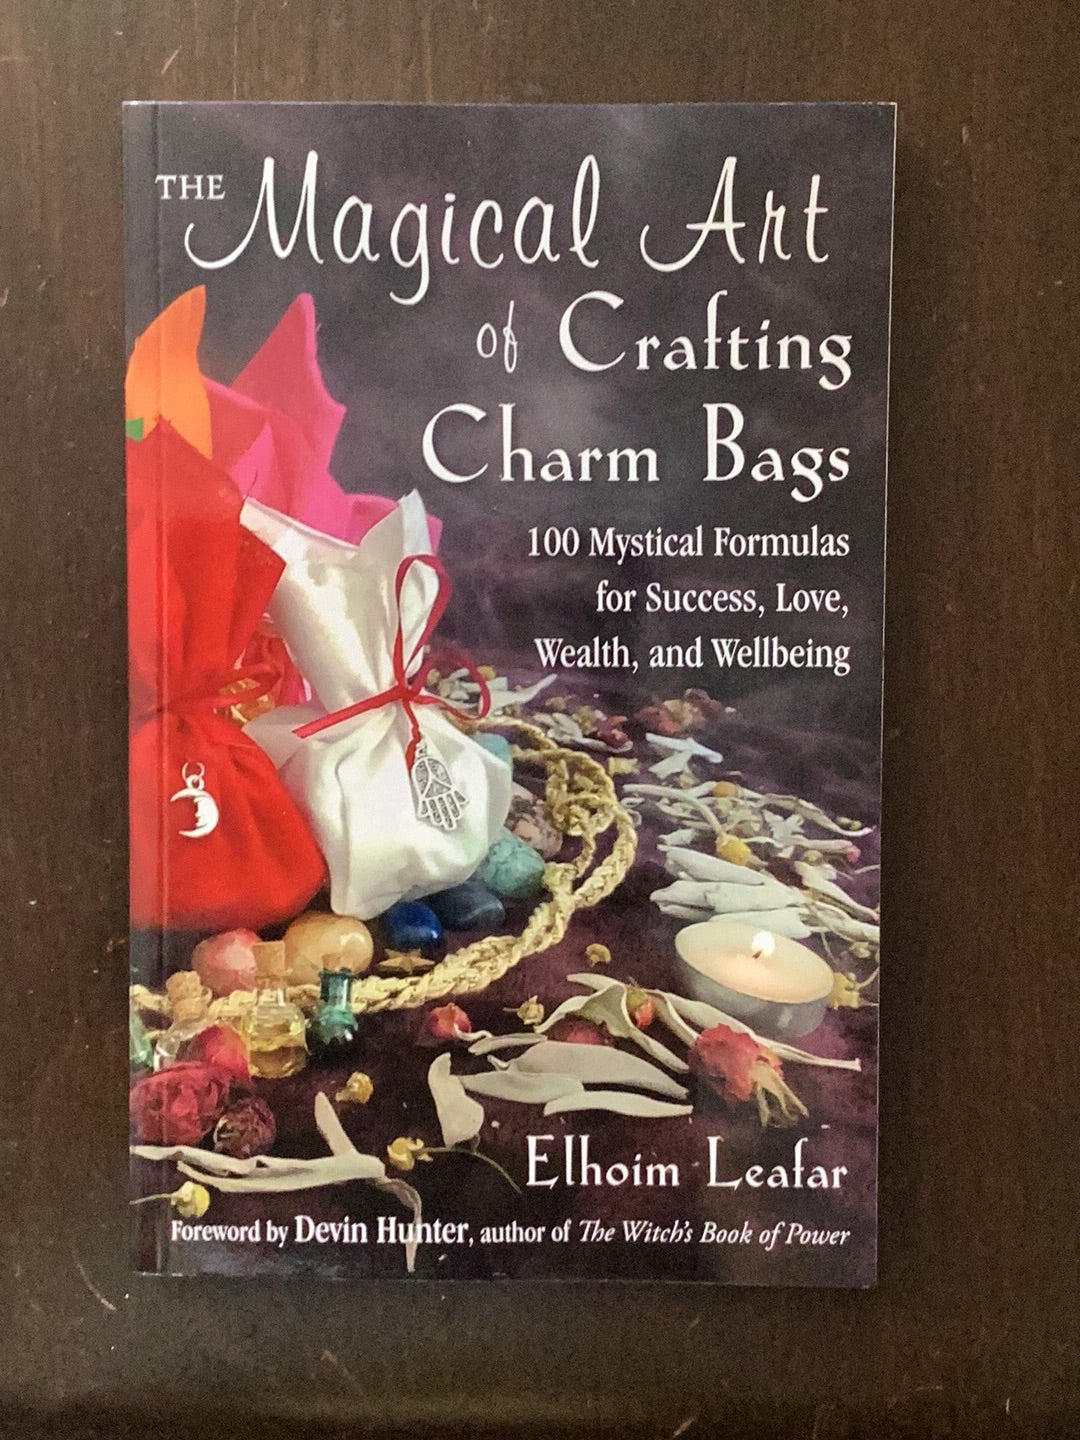 The magical art of crafting charm bags by Elhoim Leafar